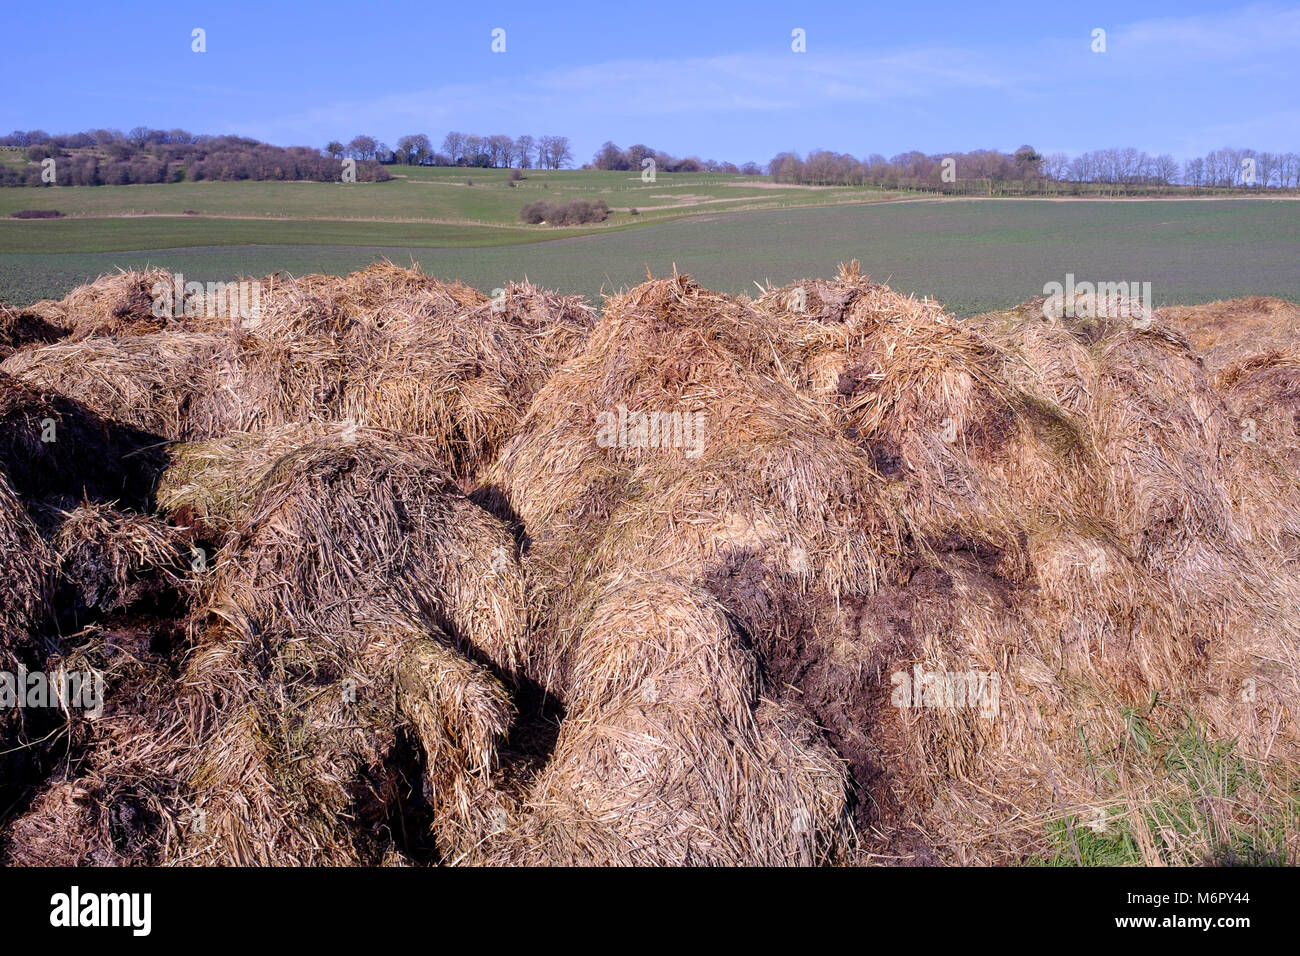 Cow manure and straw fertilizer heaped alongside farm fields, Kent UK. Stock Photo